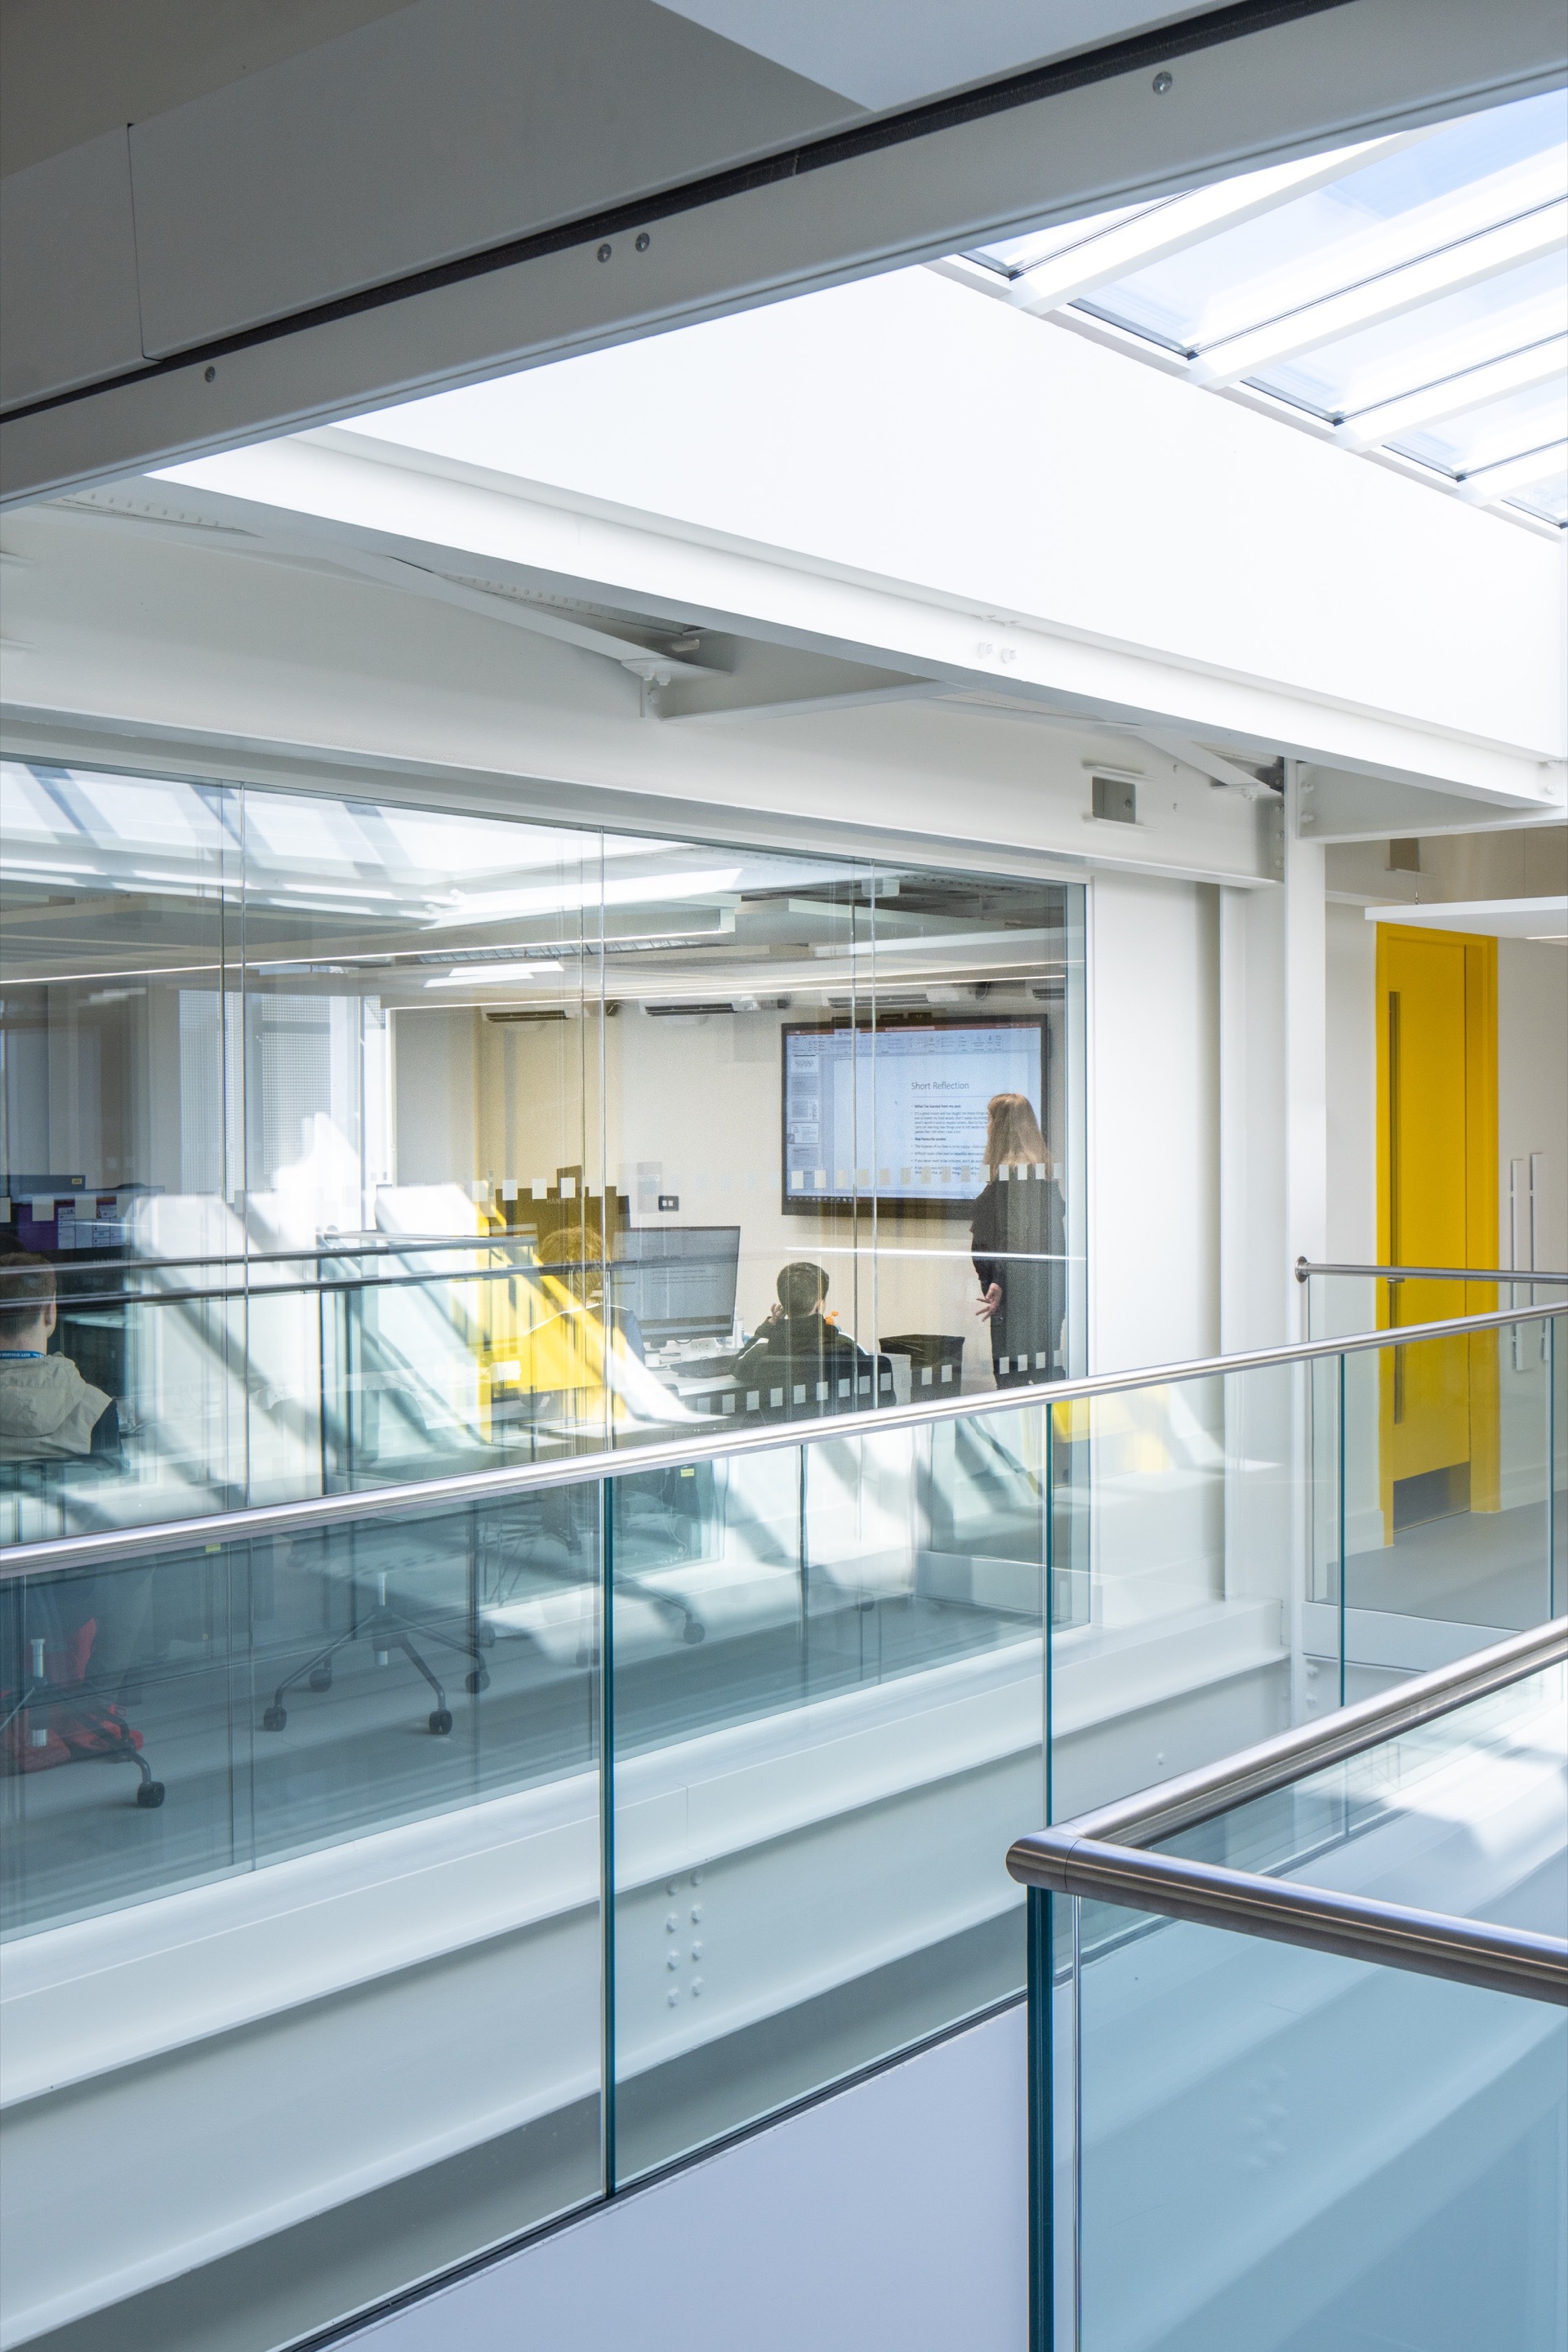 14_digi-tech-factory-corridor-view-into-classroom-c-coffey-architects.jpg